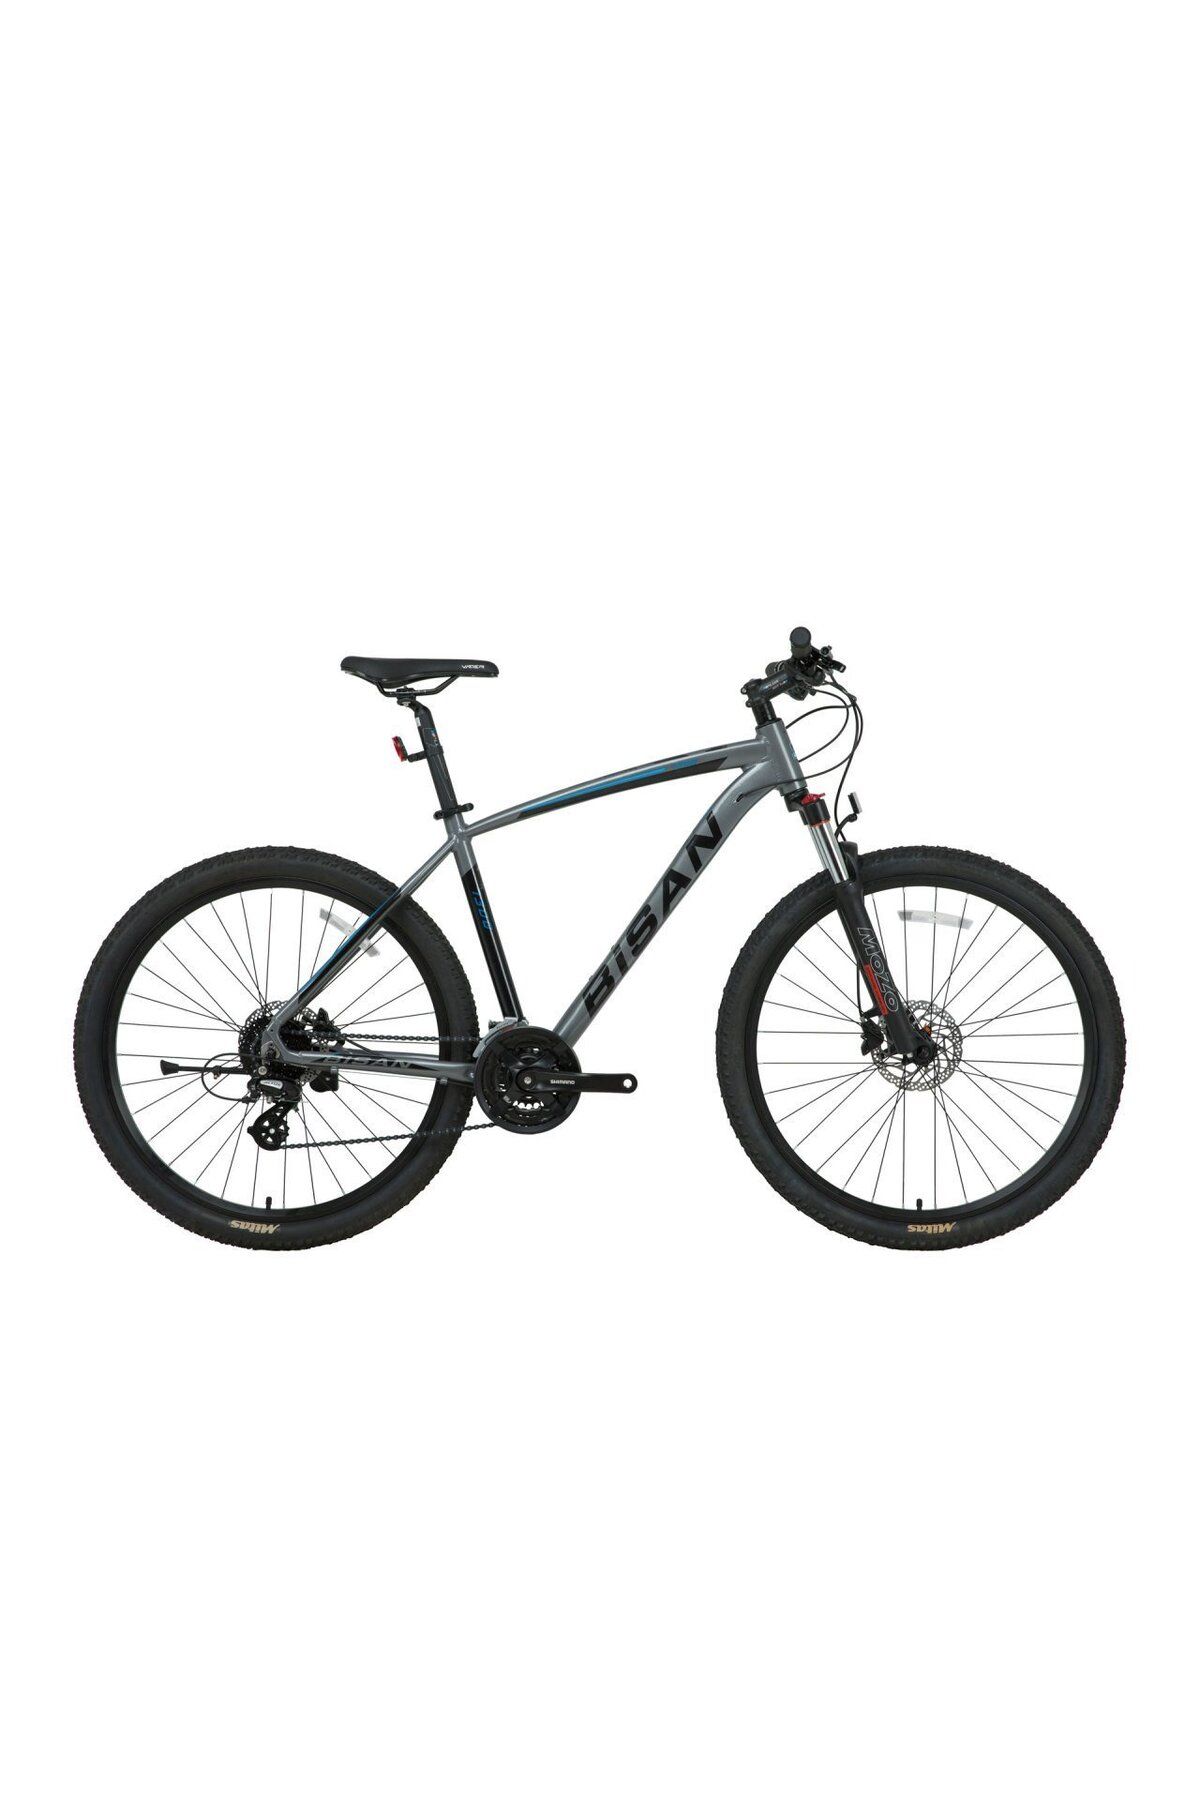 Bisan MTX 7300 27.5 Jant Dağ Bisikleti Gri-Yeşil-43 cm